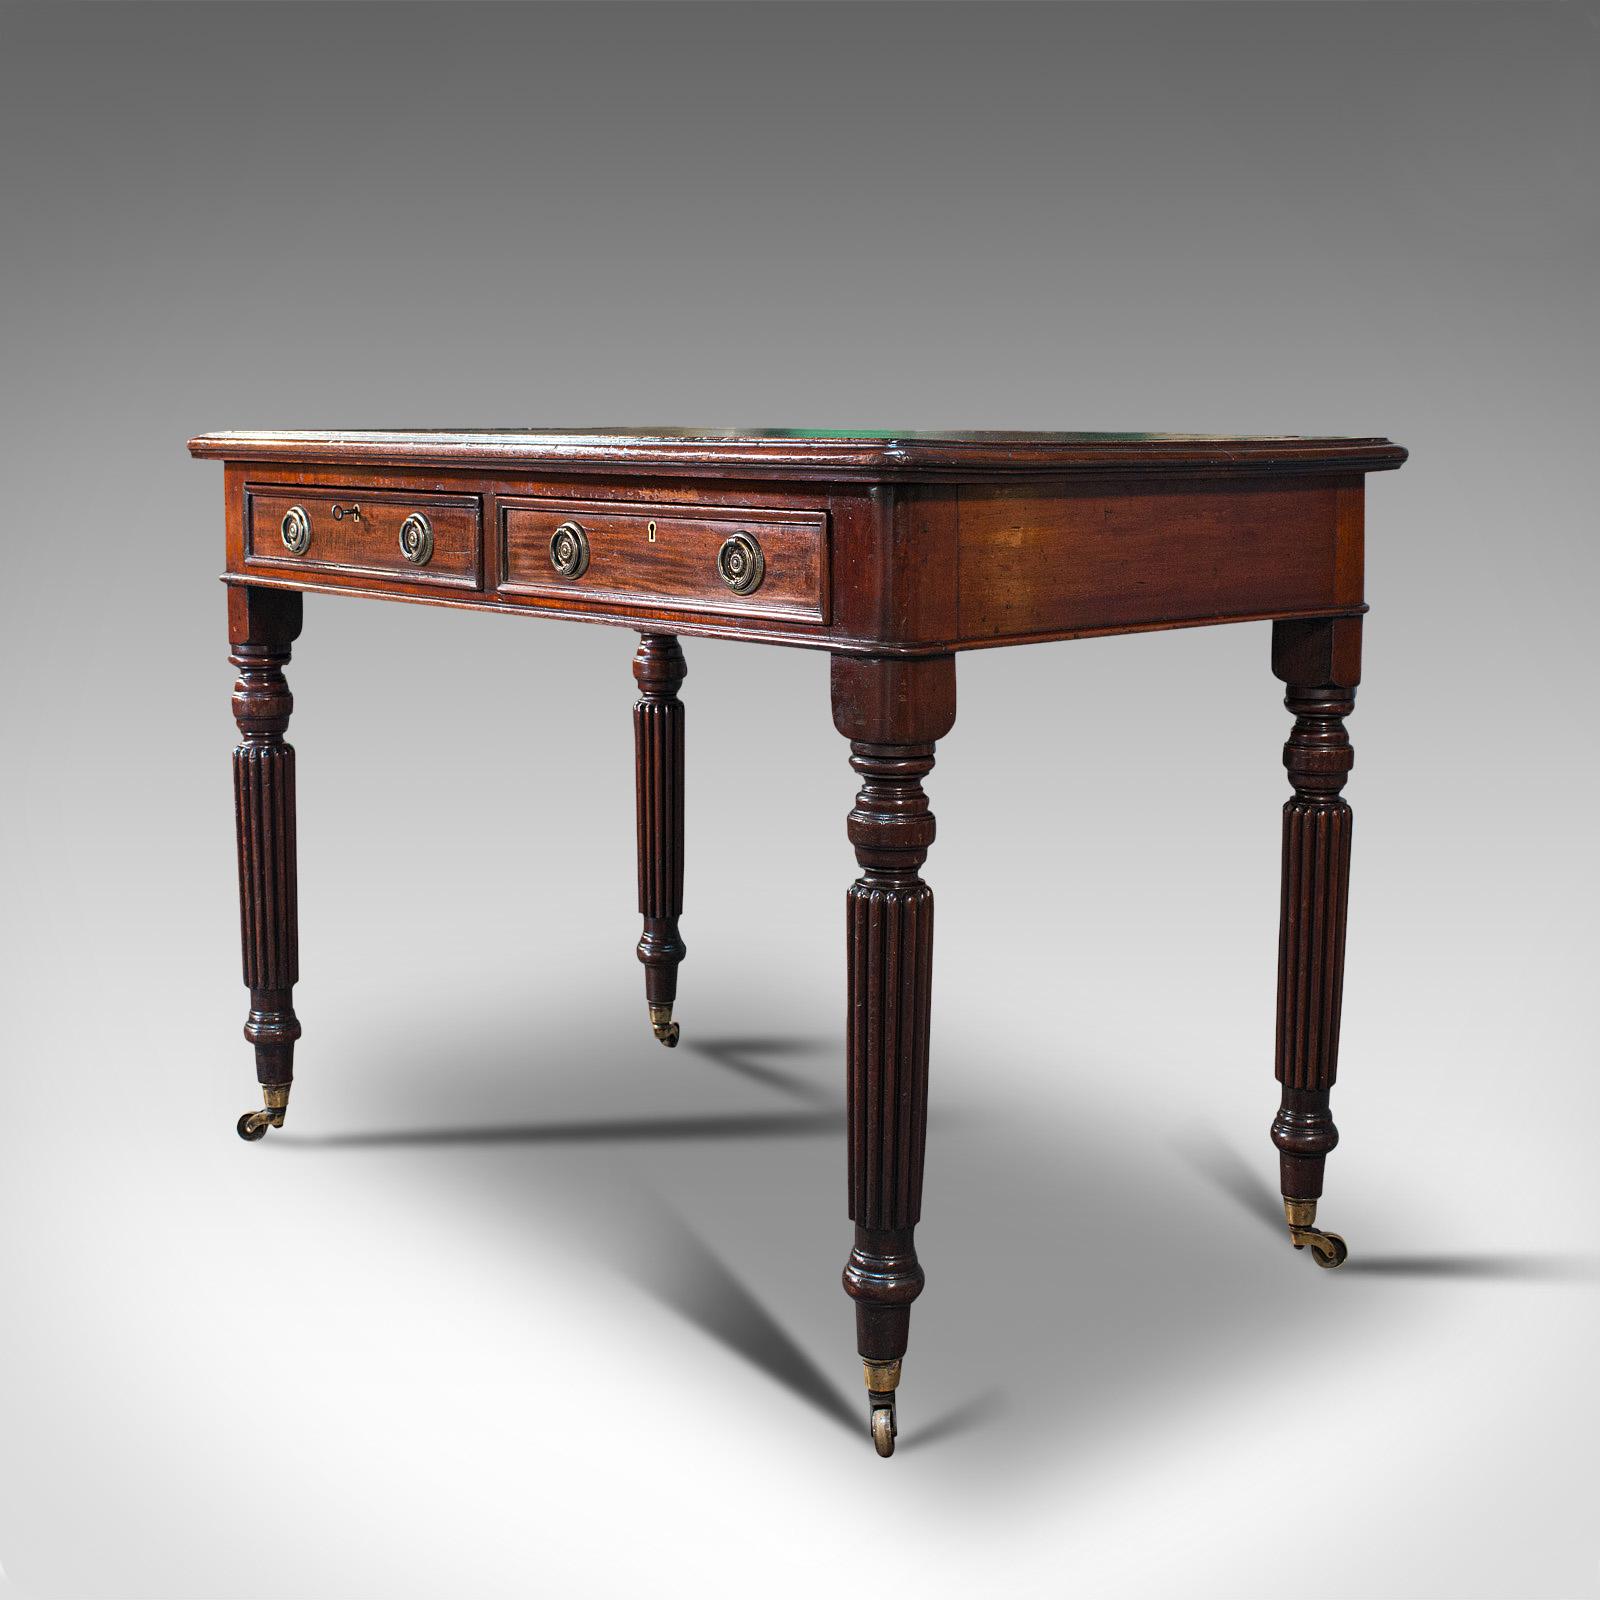 British Antique Correspondence Desk, English, Mahogany, Writing Table, Regency, C.1820